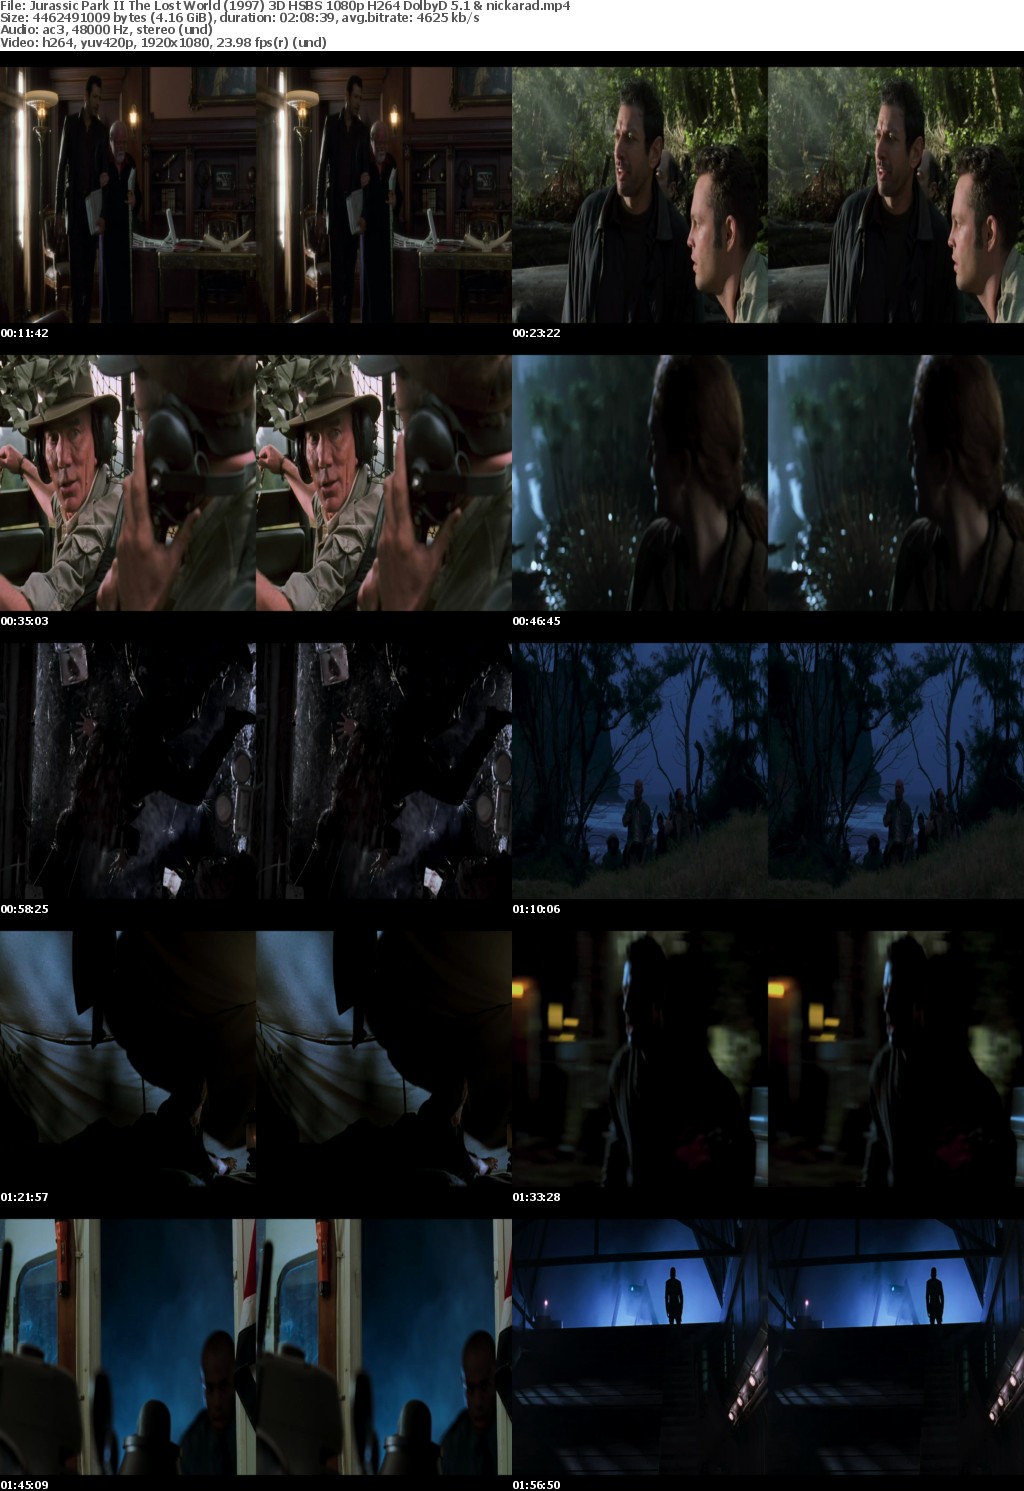 Jurassic Park II The Lost World (1997) 3D HSBS 1080p H264 DolbyD 5 1 nickarad